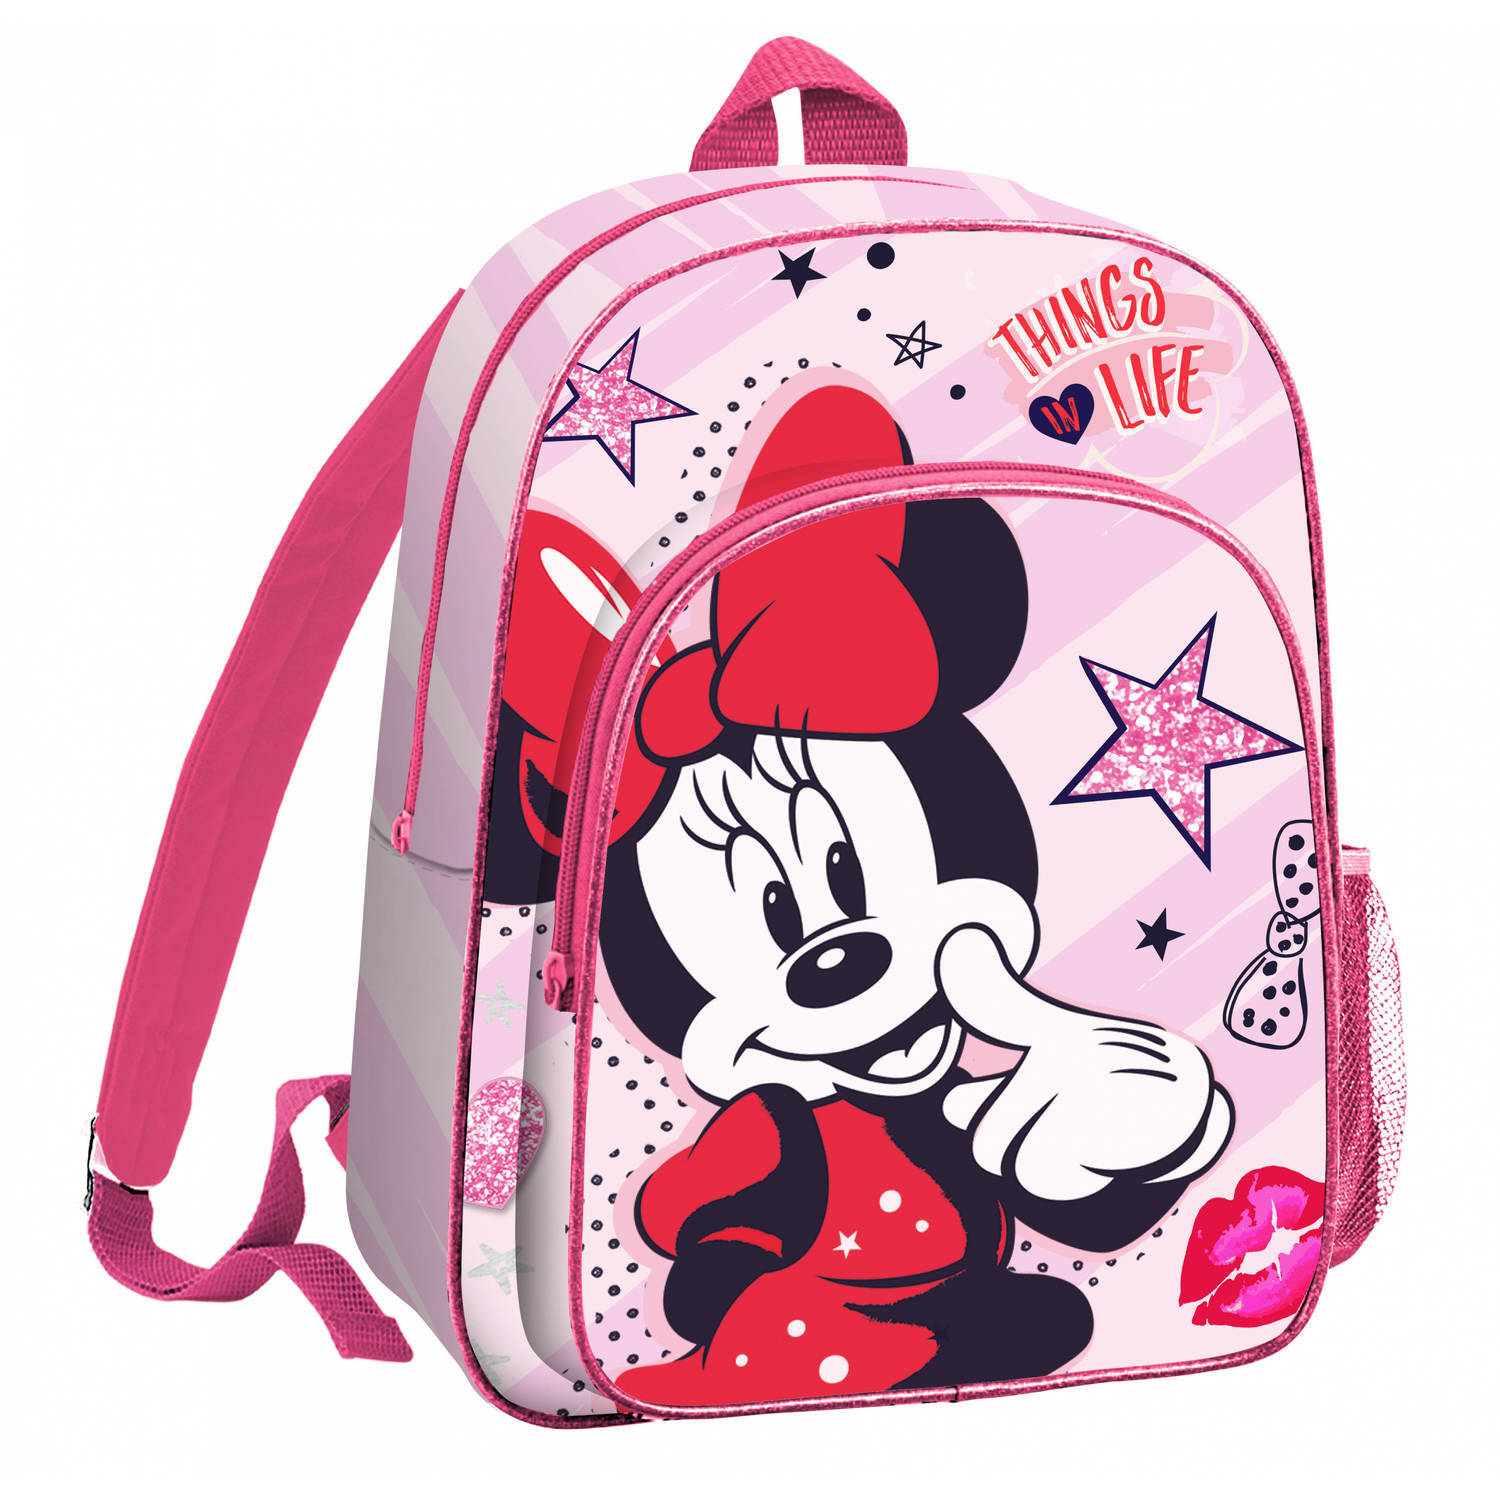 Disney rugzak Minnie Mouse meisjes 25 cm polyester roze